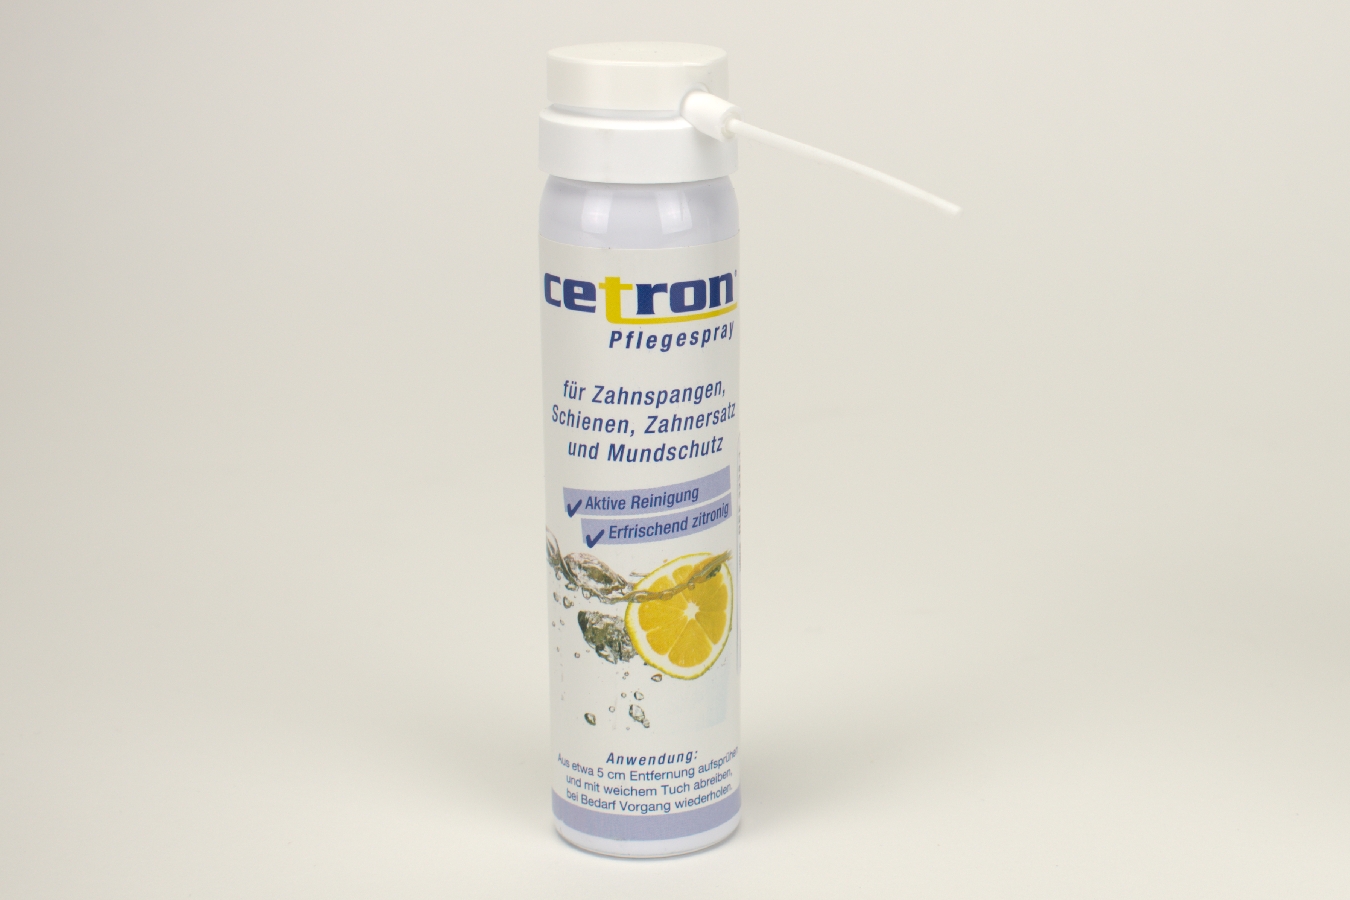 Cetron Pflegespray lemon 75ml